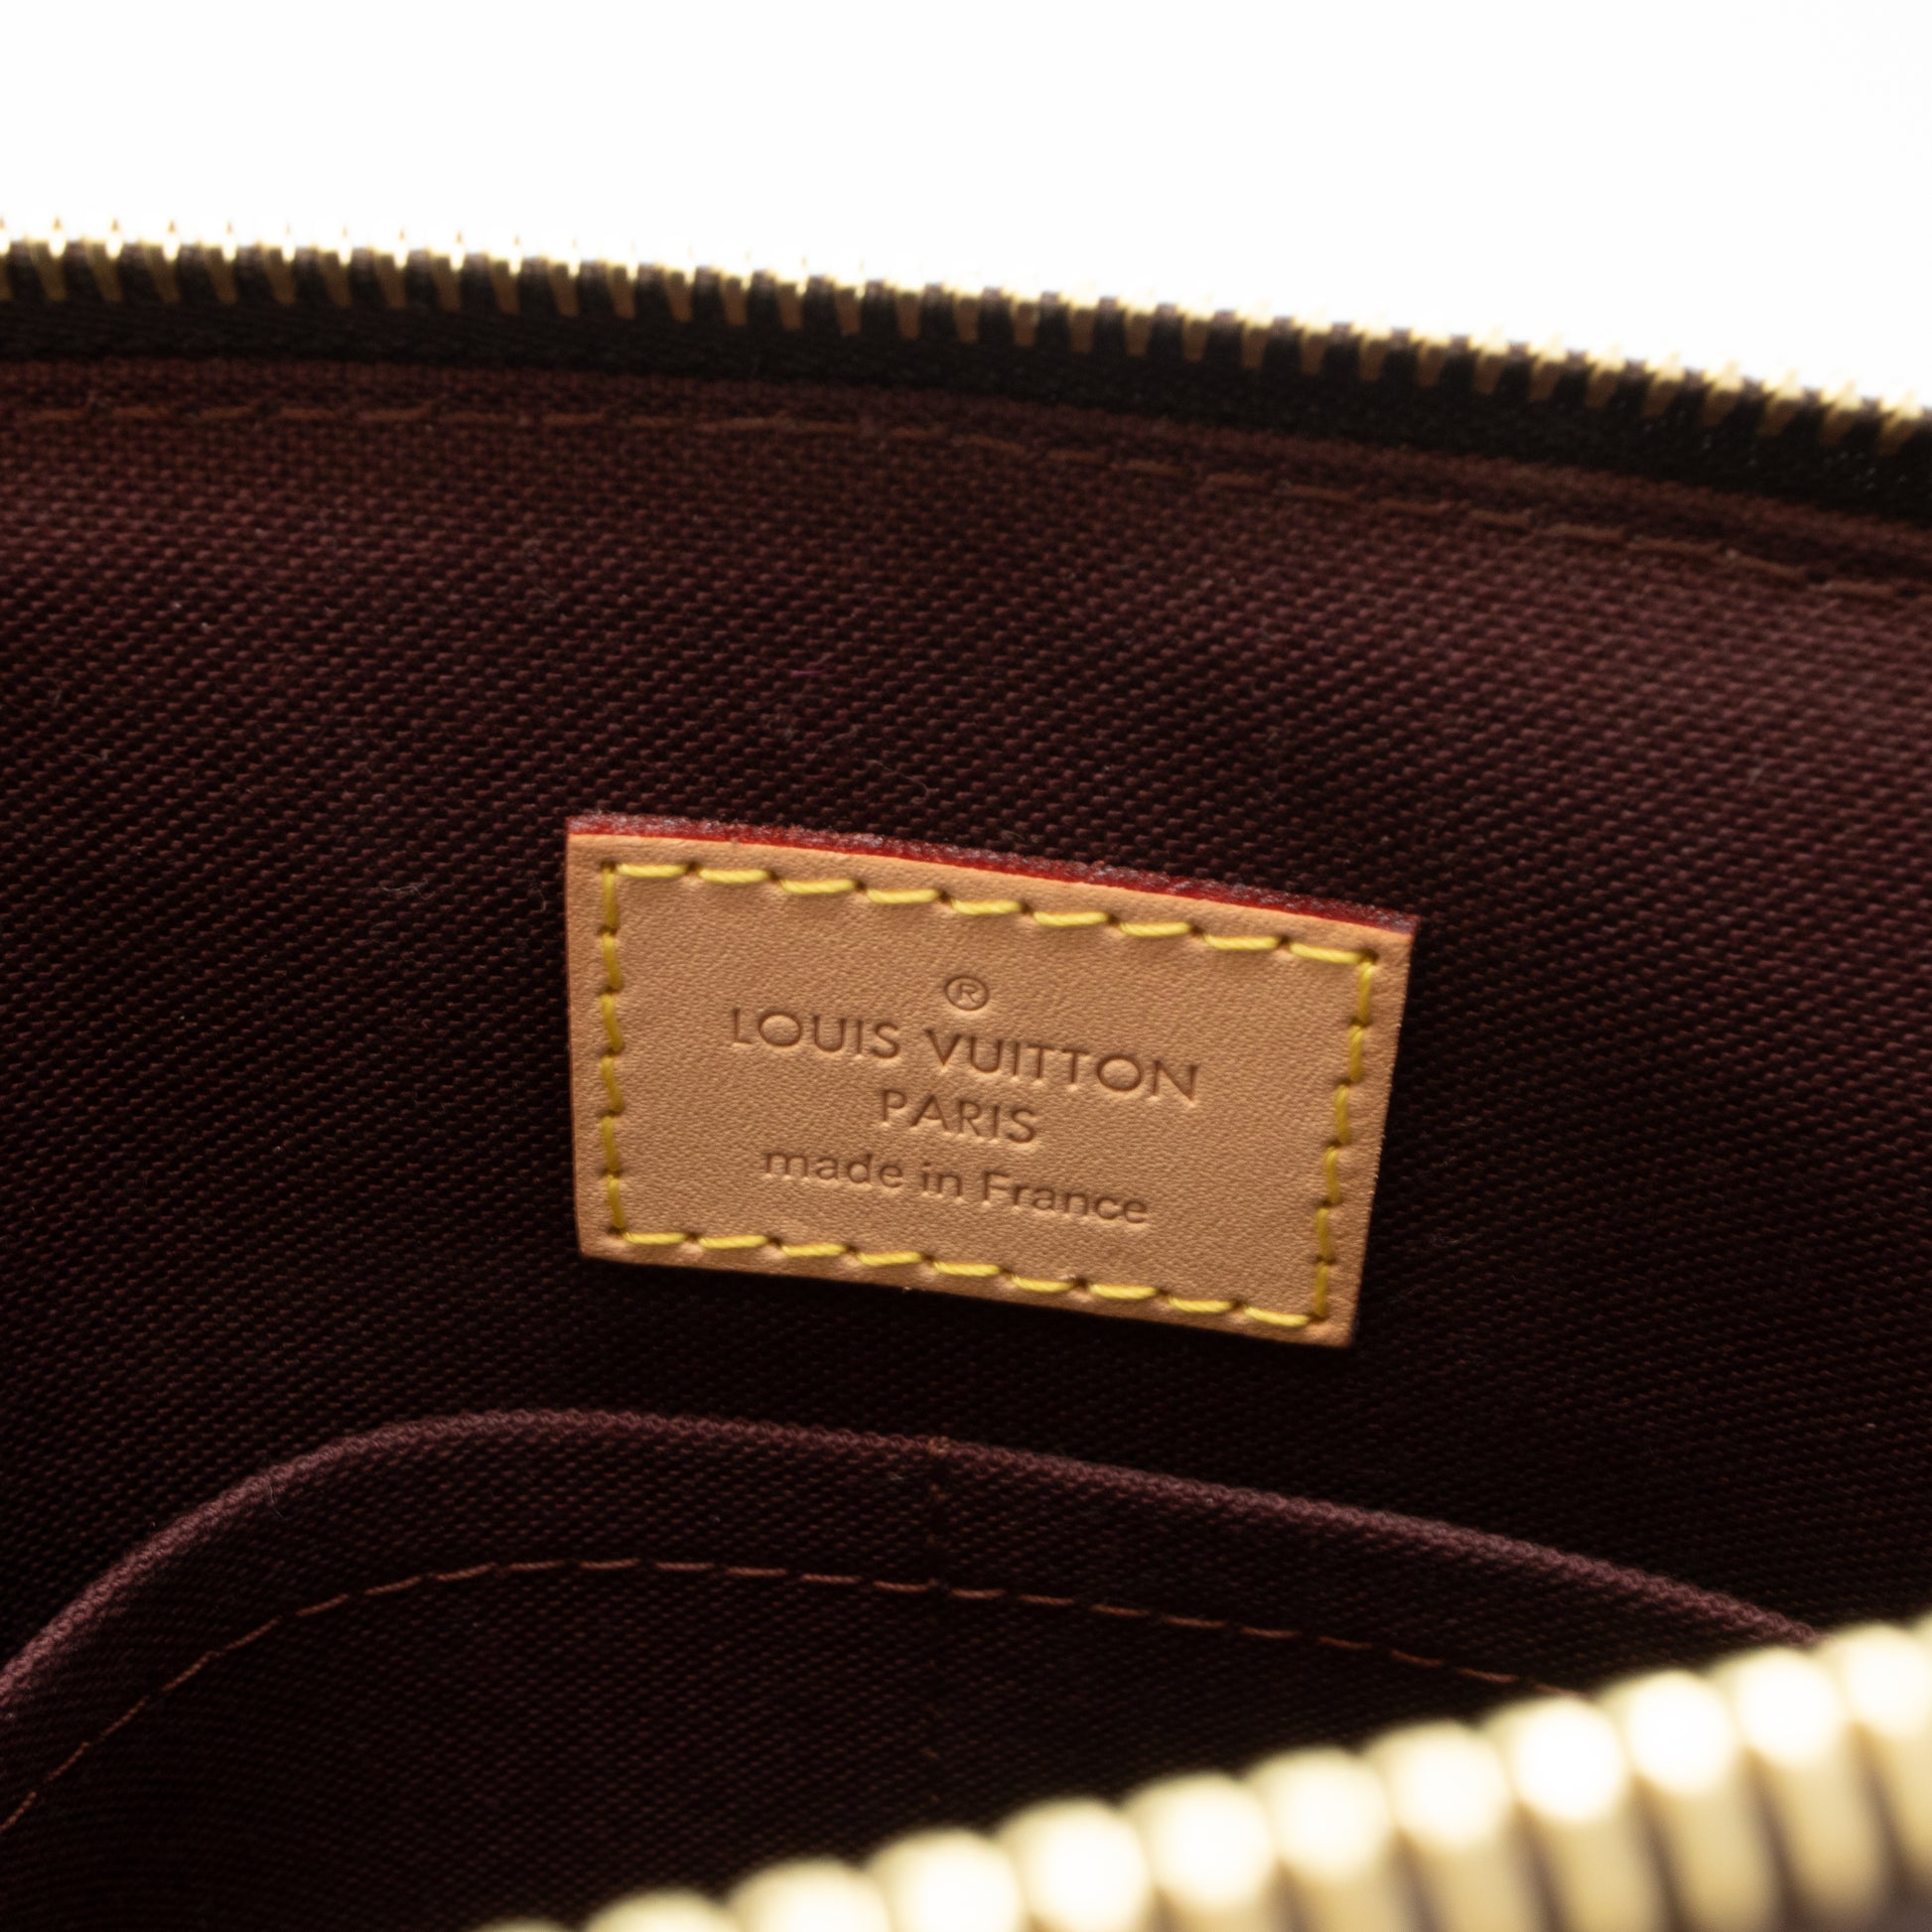 Rivoli NM PM Monogram – Keeks Designer Handbags